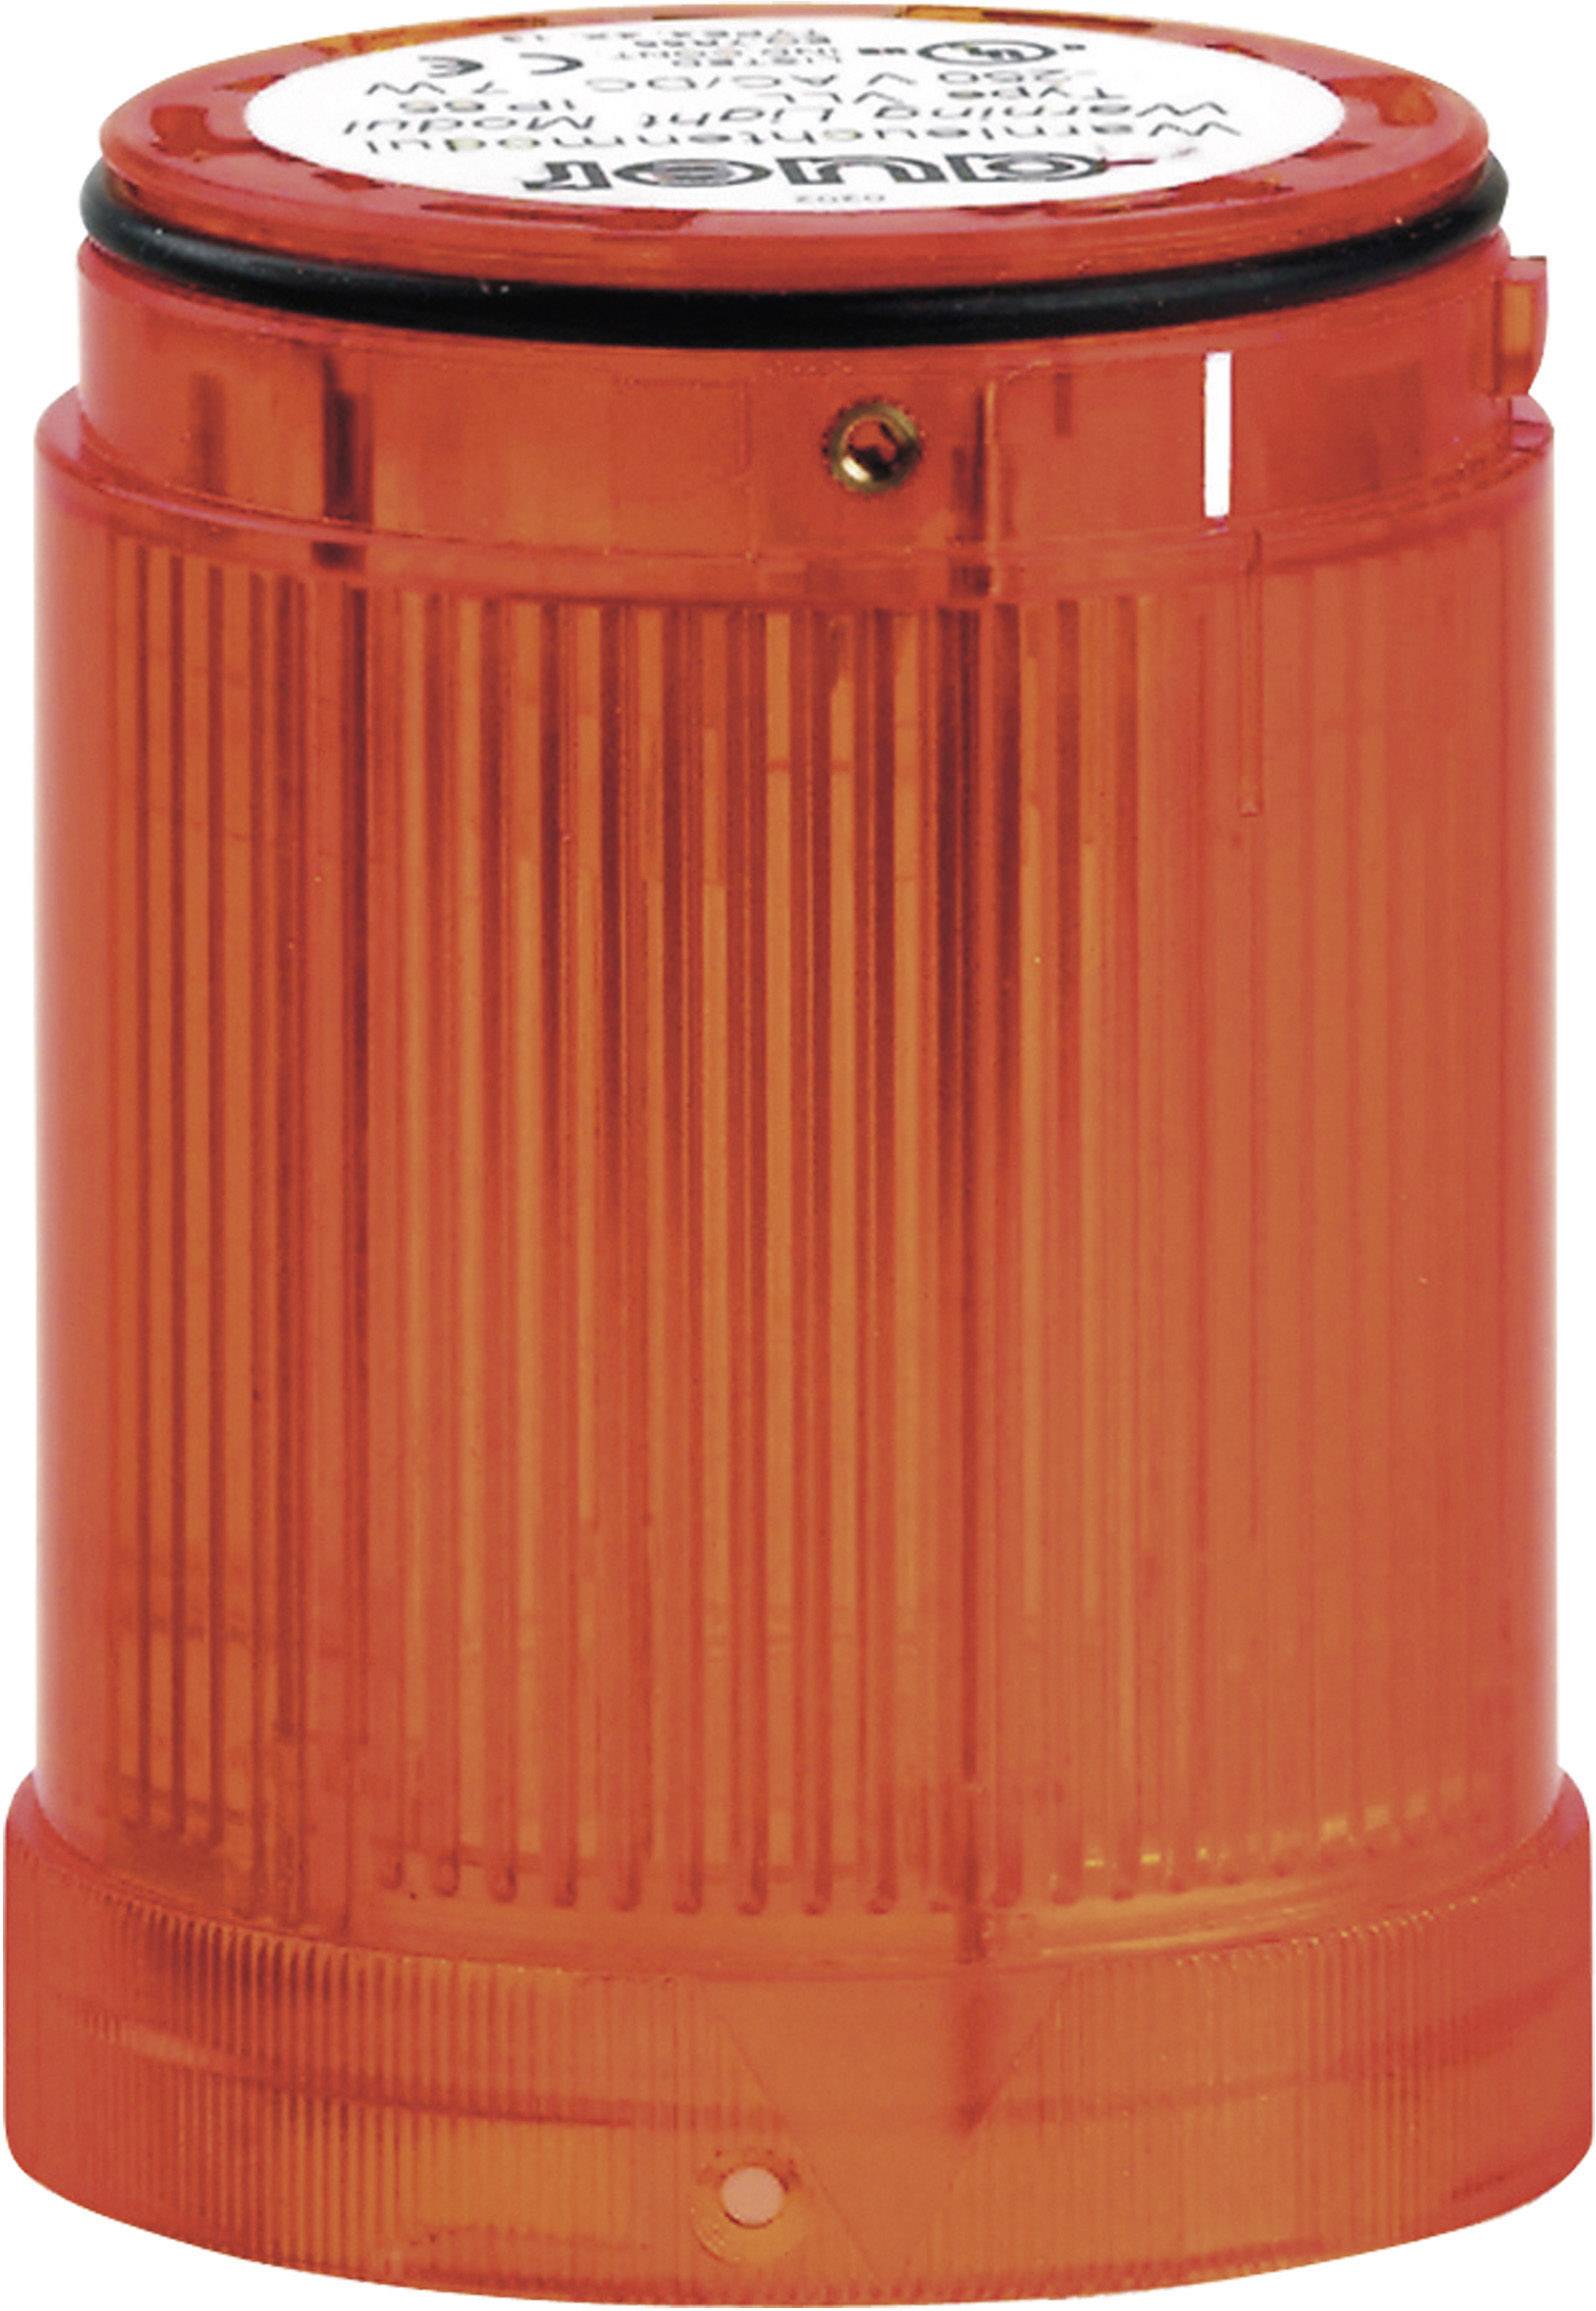 AUER SIGNAL Signalsäulenelement LED Auer Signalgeräte VDF Orange Blitzlicht 230 V/AC